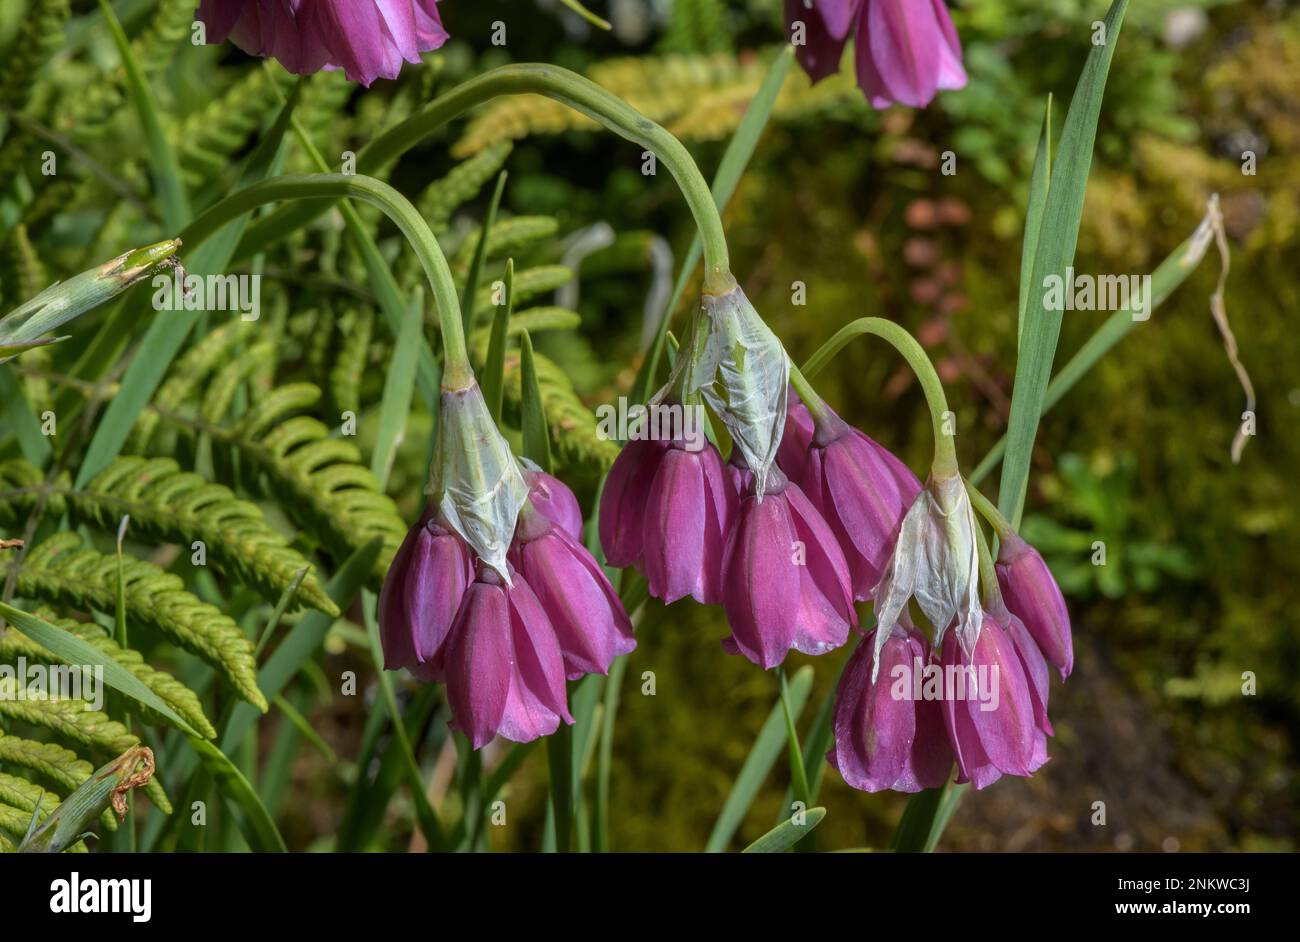 Lombardy garlic (Allium insubricum) in flower Stock Photo